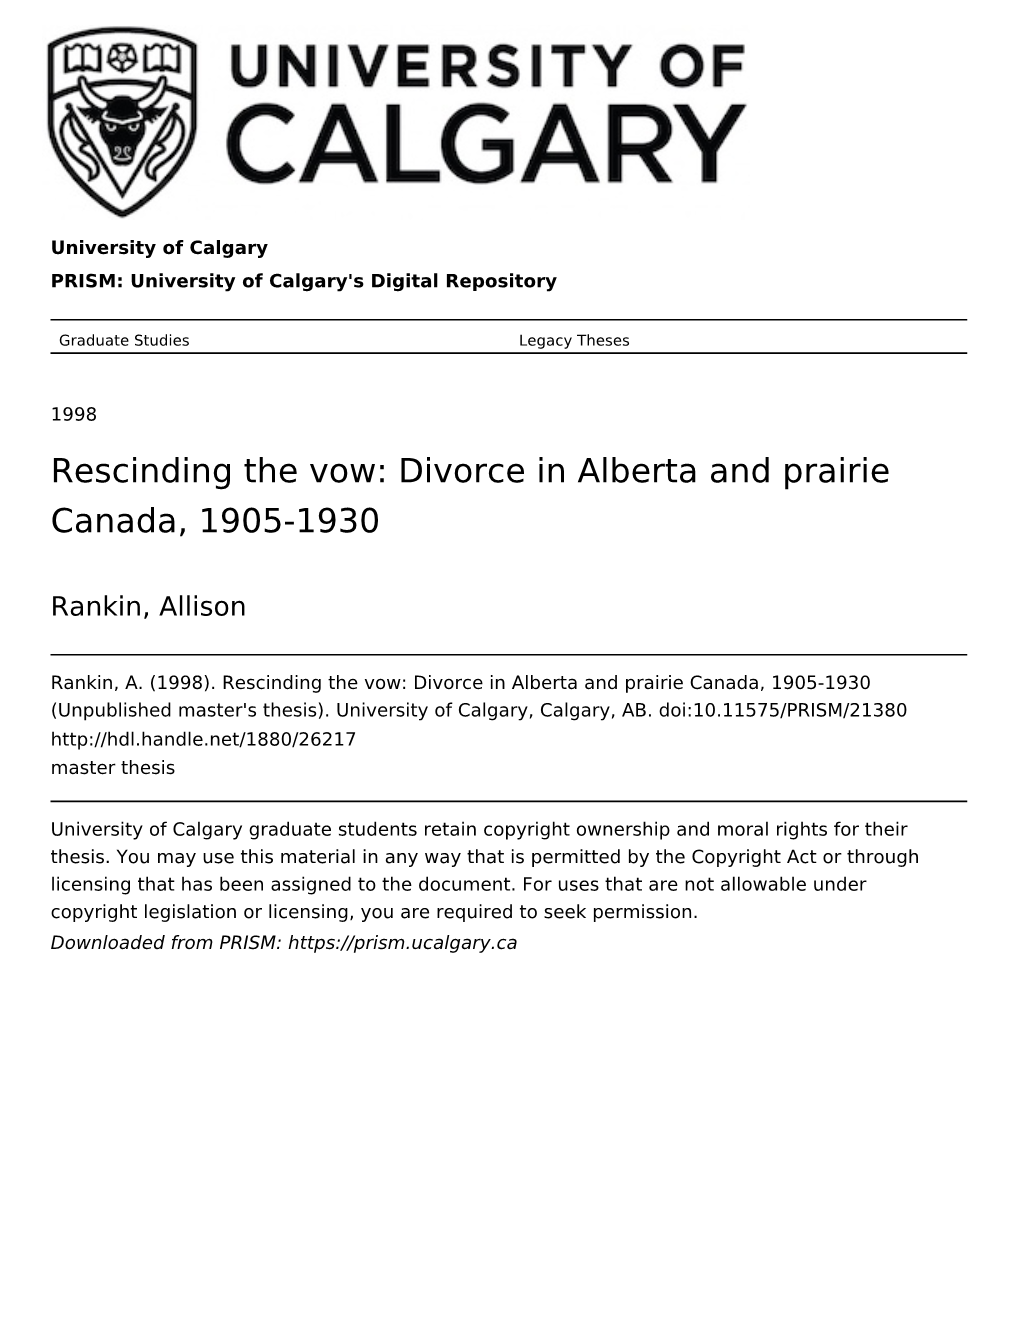 Divorce in Alberta and Prairie Canada, 1905-1930